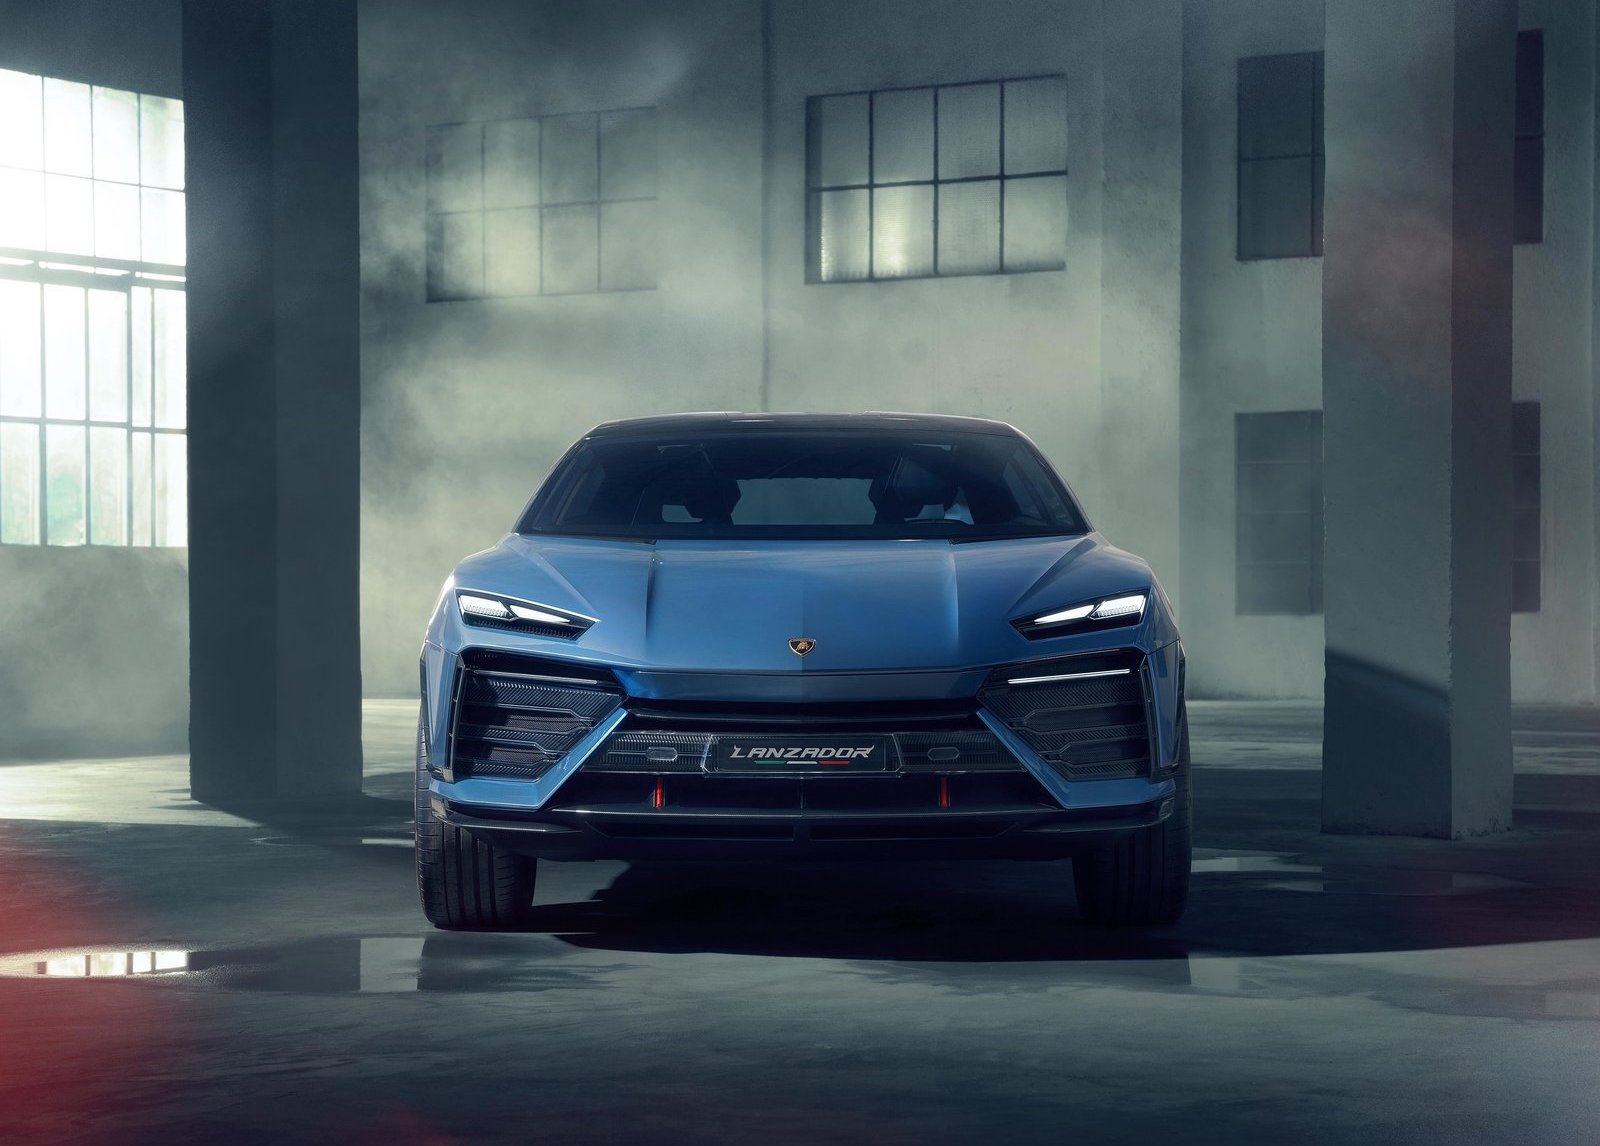 Lamborghini Previews 2028 Electric Production Car with Lanzador Concept